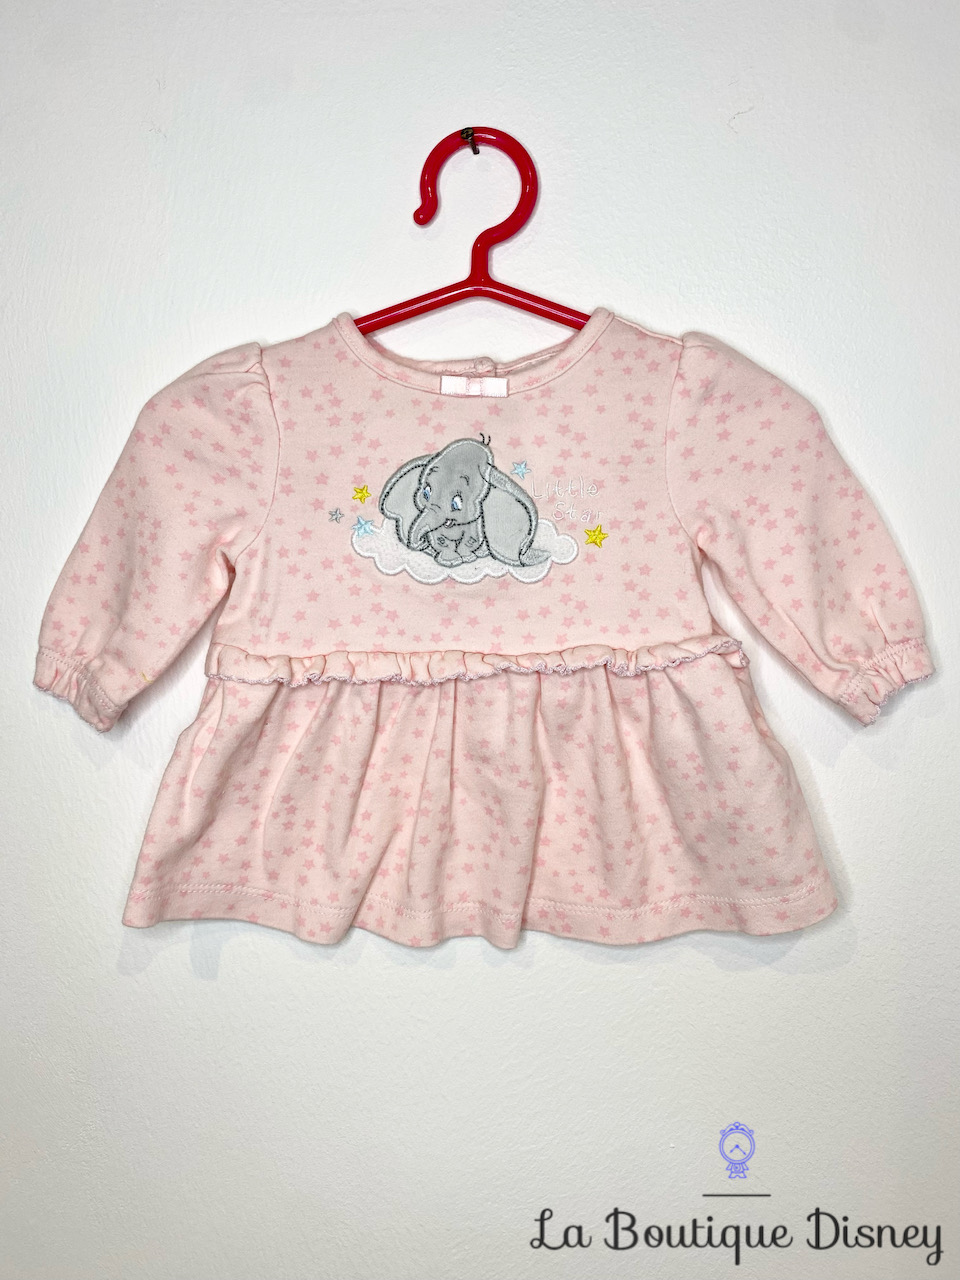 robe-dumbo-disney-baby-by-disney-store-3-mois-rose-étoiles-8